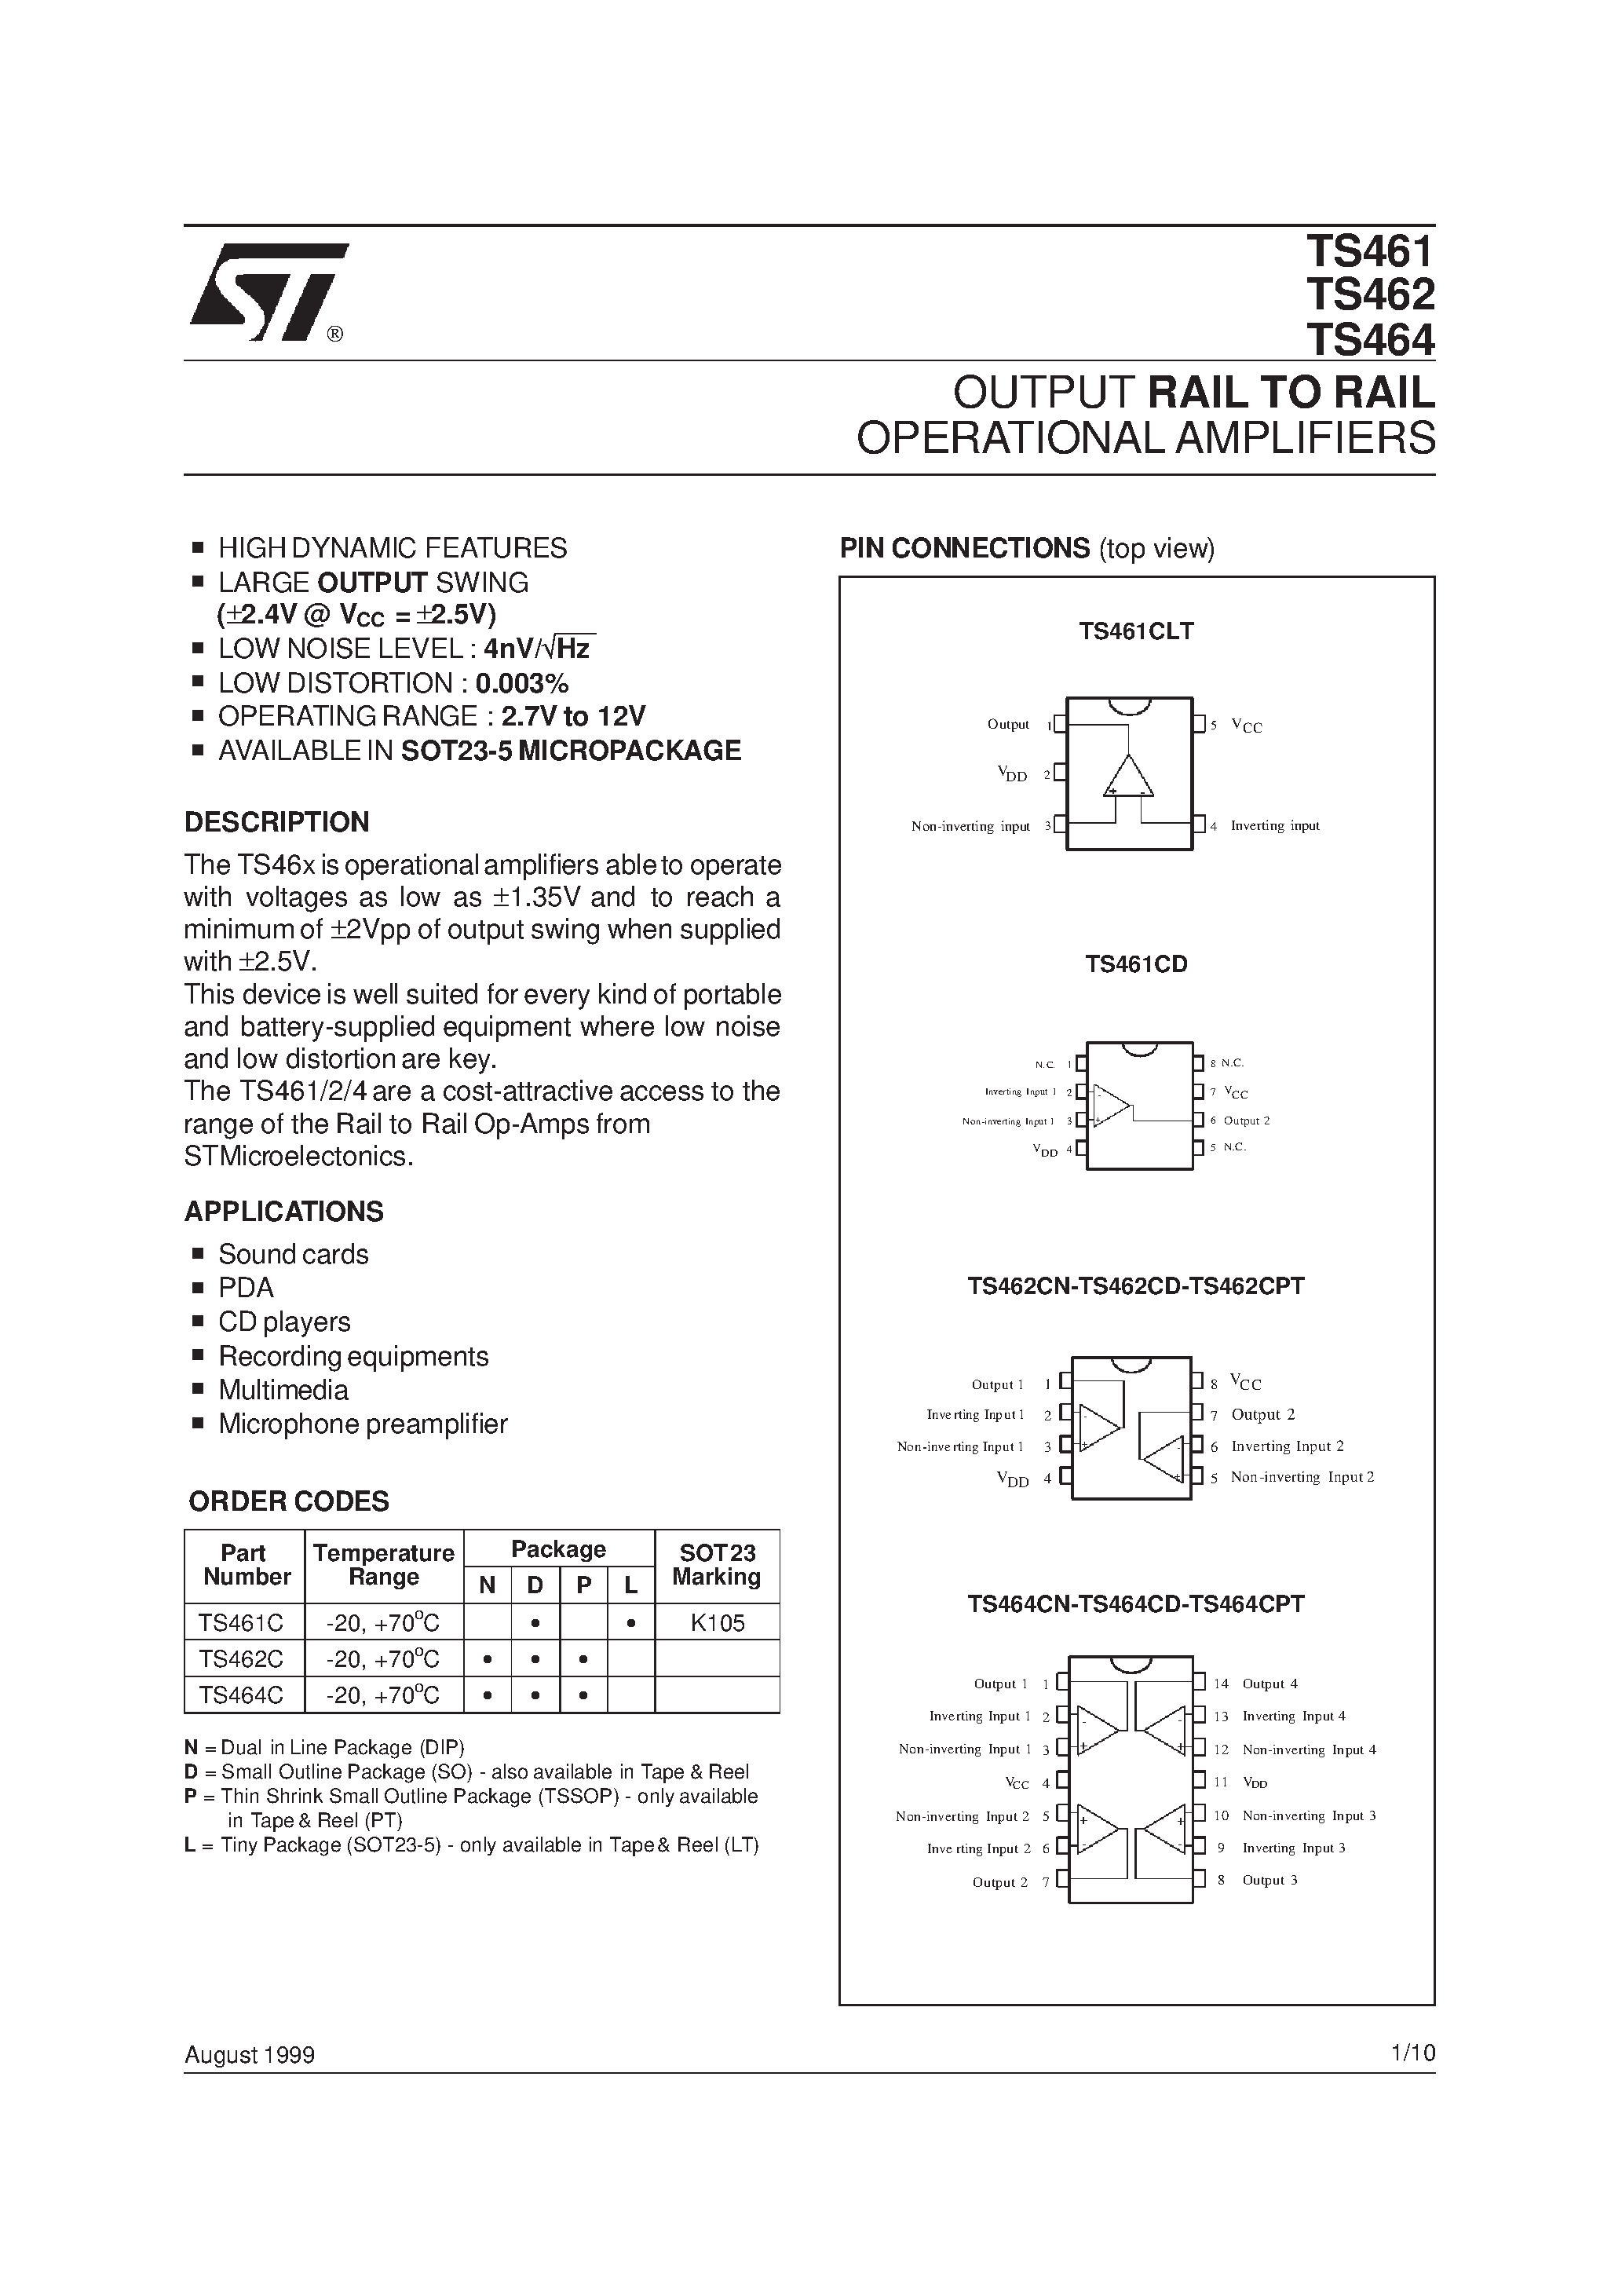 Datasheet TS461CD - OUTPUT RAIL TO RAIL OPERATIONAL AMPLIFIERS page 1